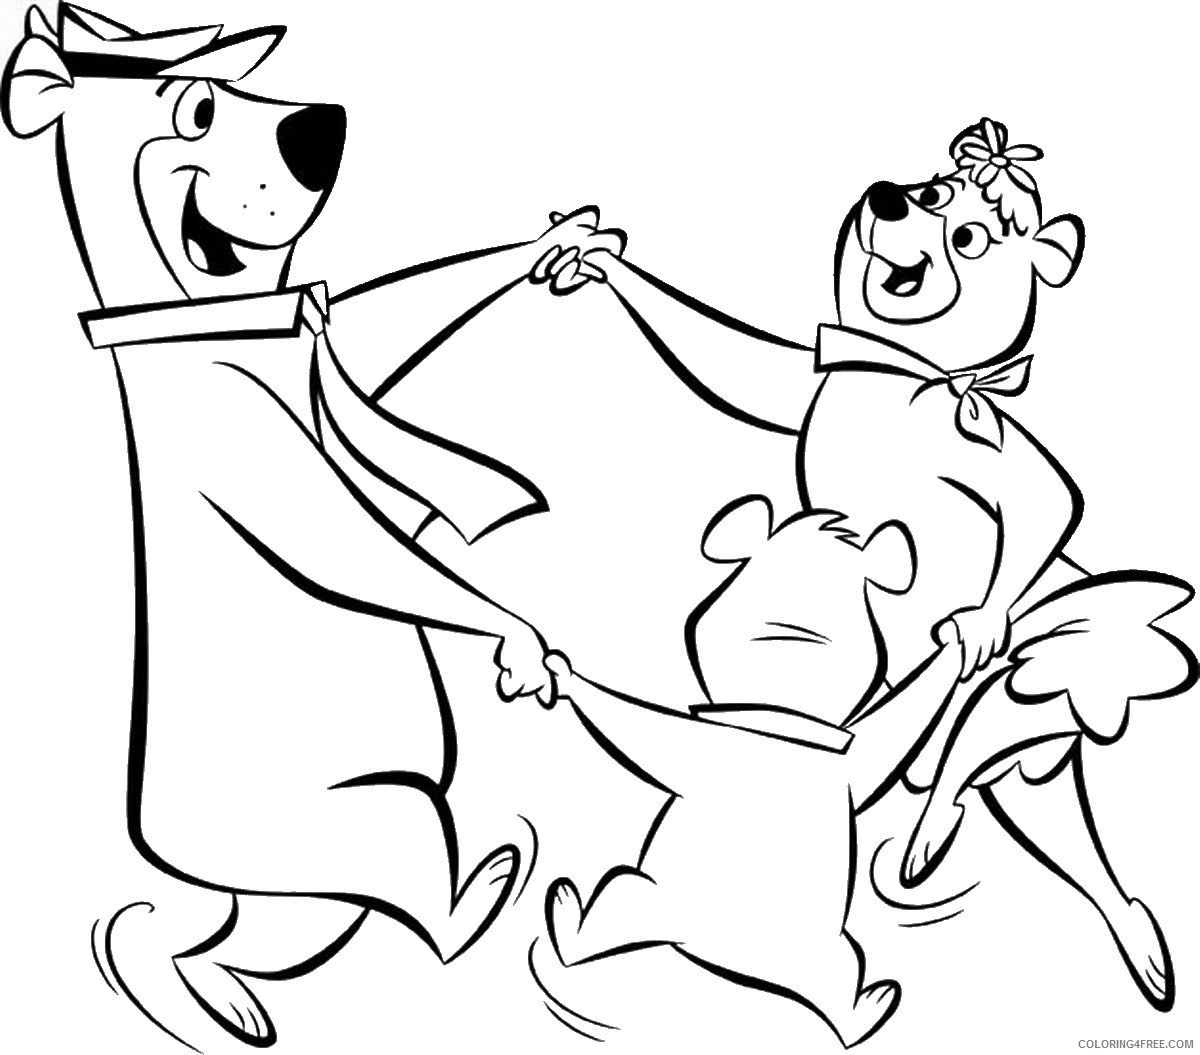 Yogi Bear Coloring Pages Cartoons yogi_bear_cl_06 Printable 2020 7256 Coloring4free